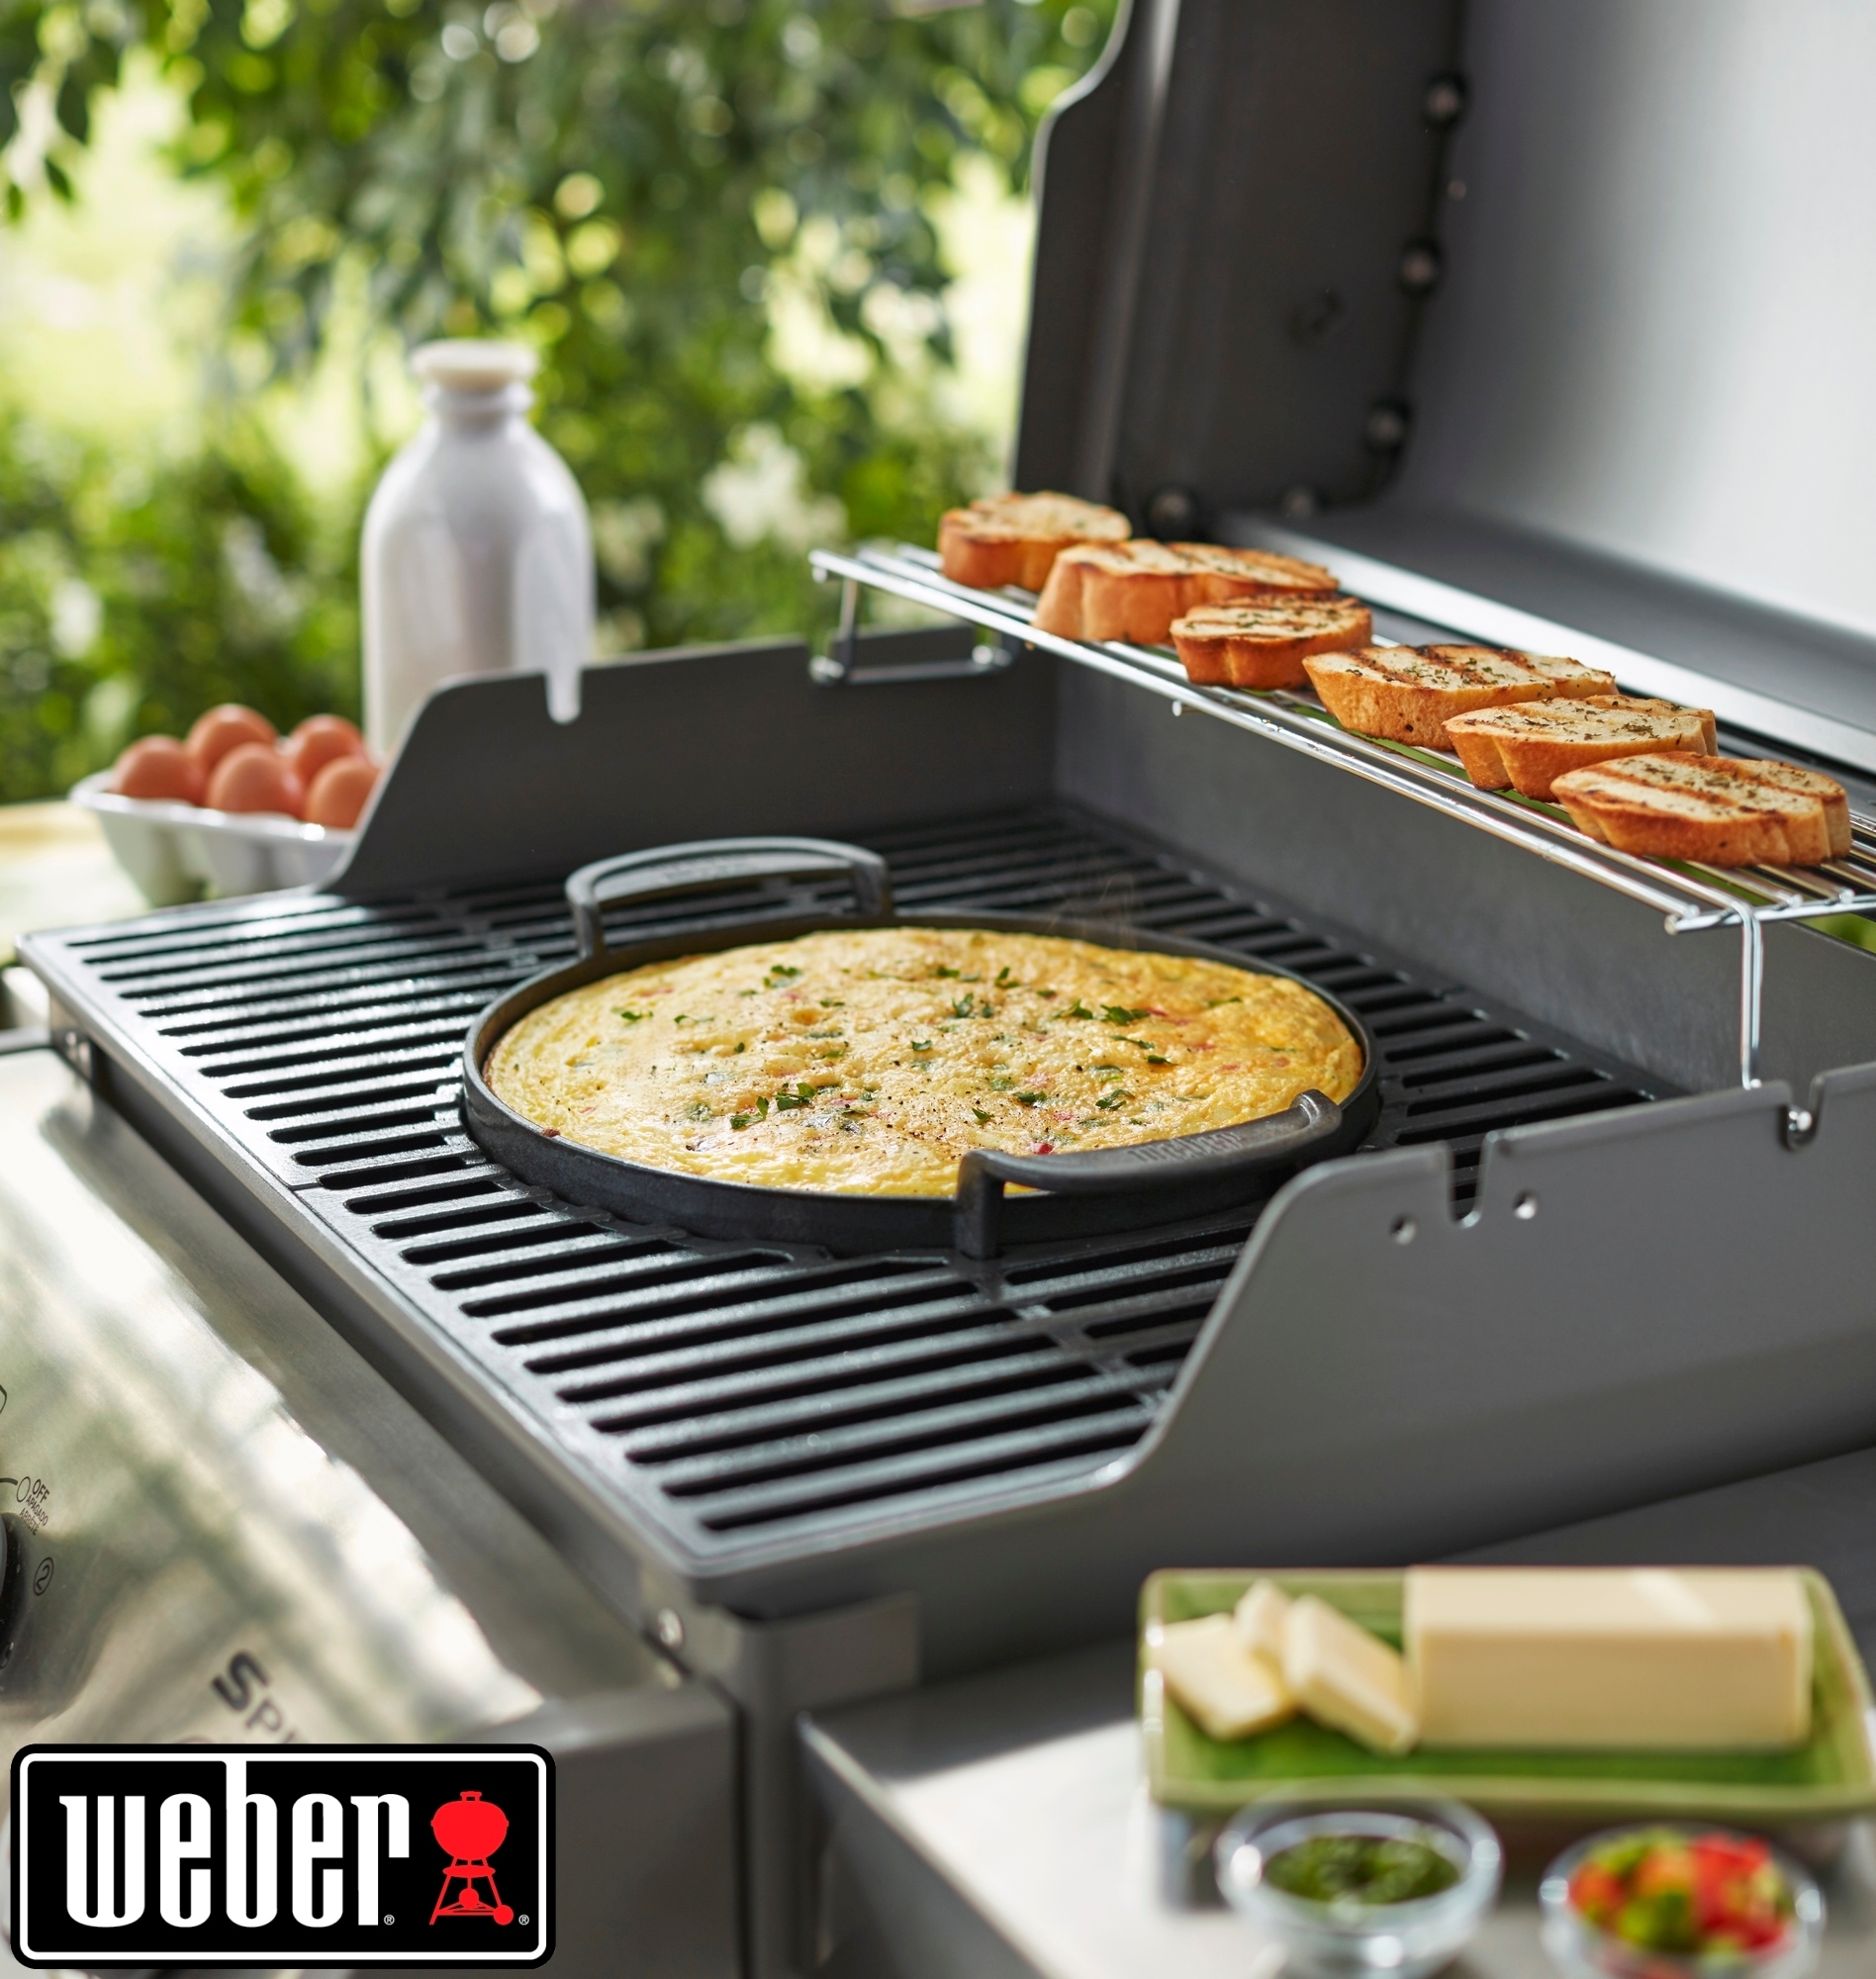 Weber Pfanne - Gourmet BBQ System